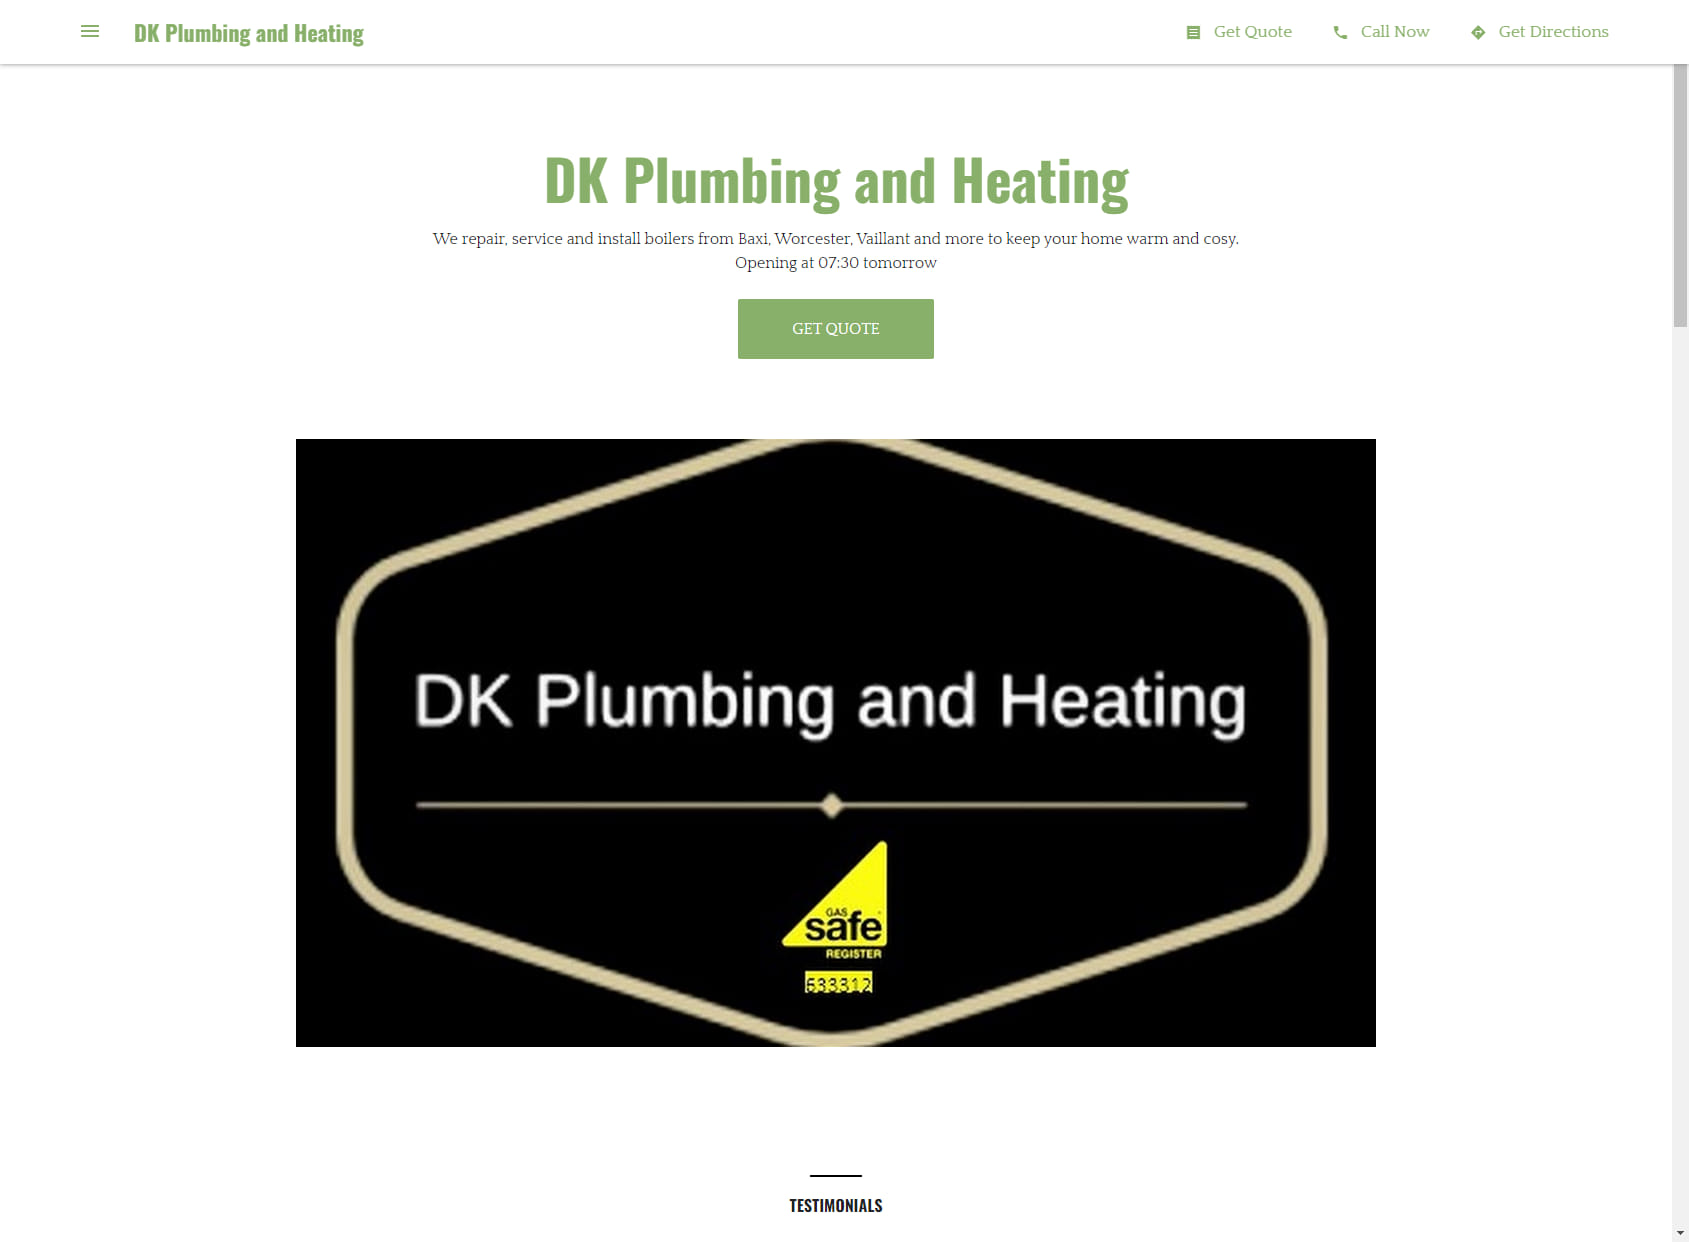 DK Plumbing and Heating